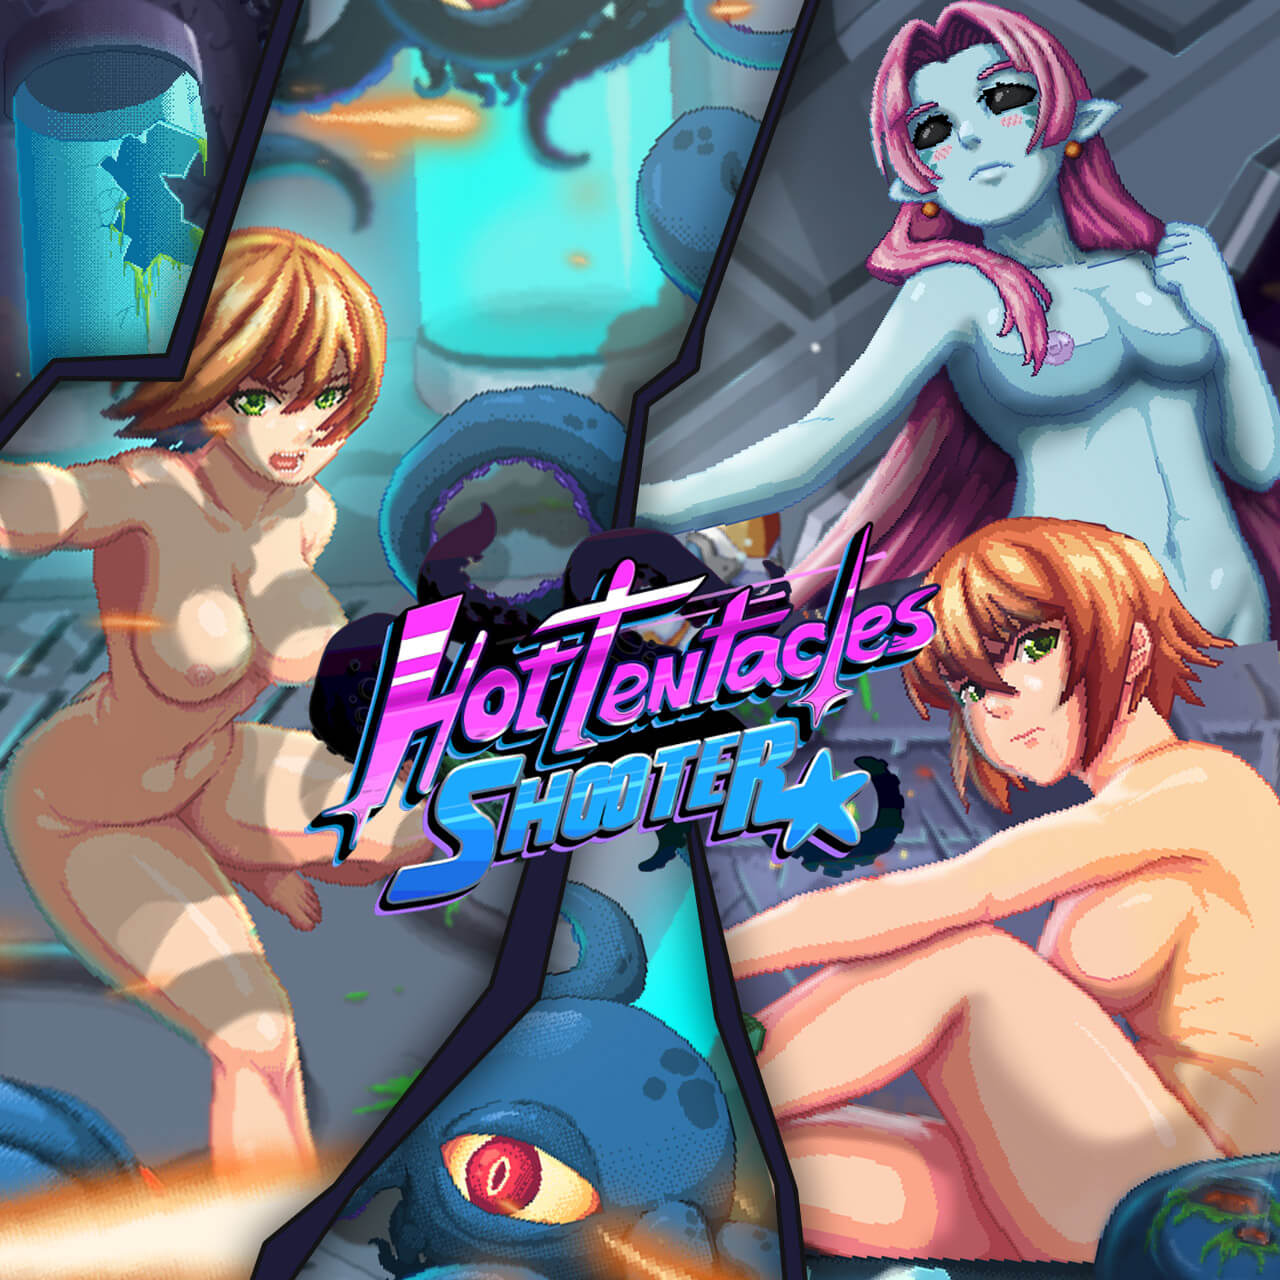 Hot Tentacles Shooter - Retro Sex Game | Nutaku